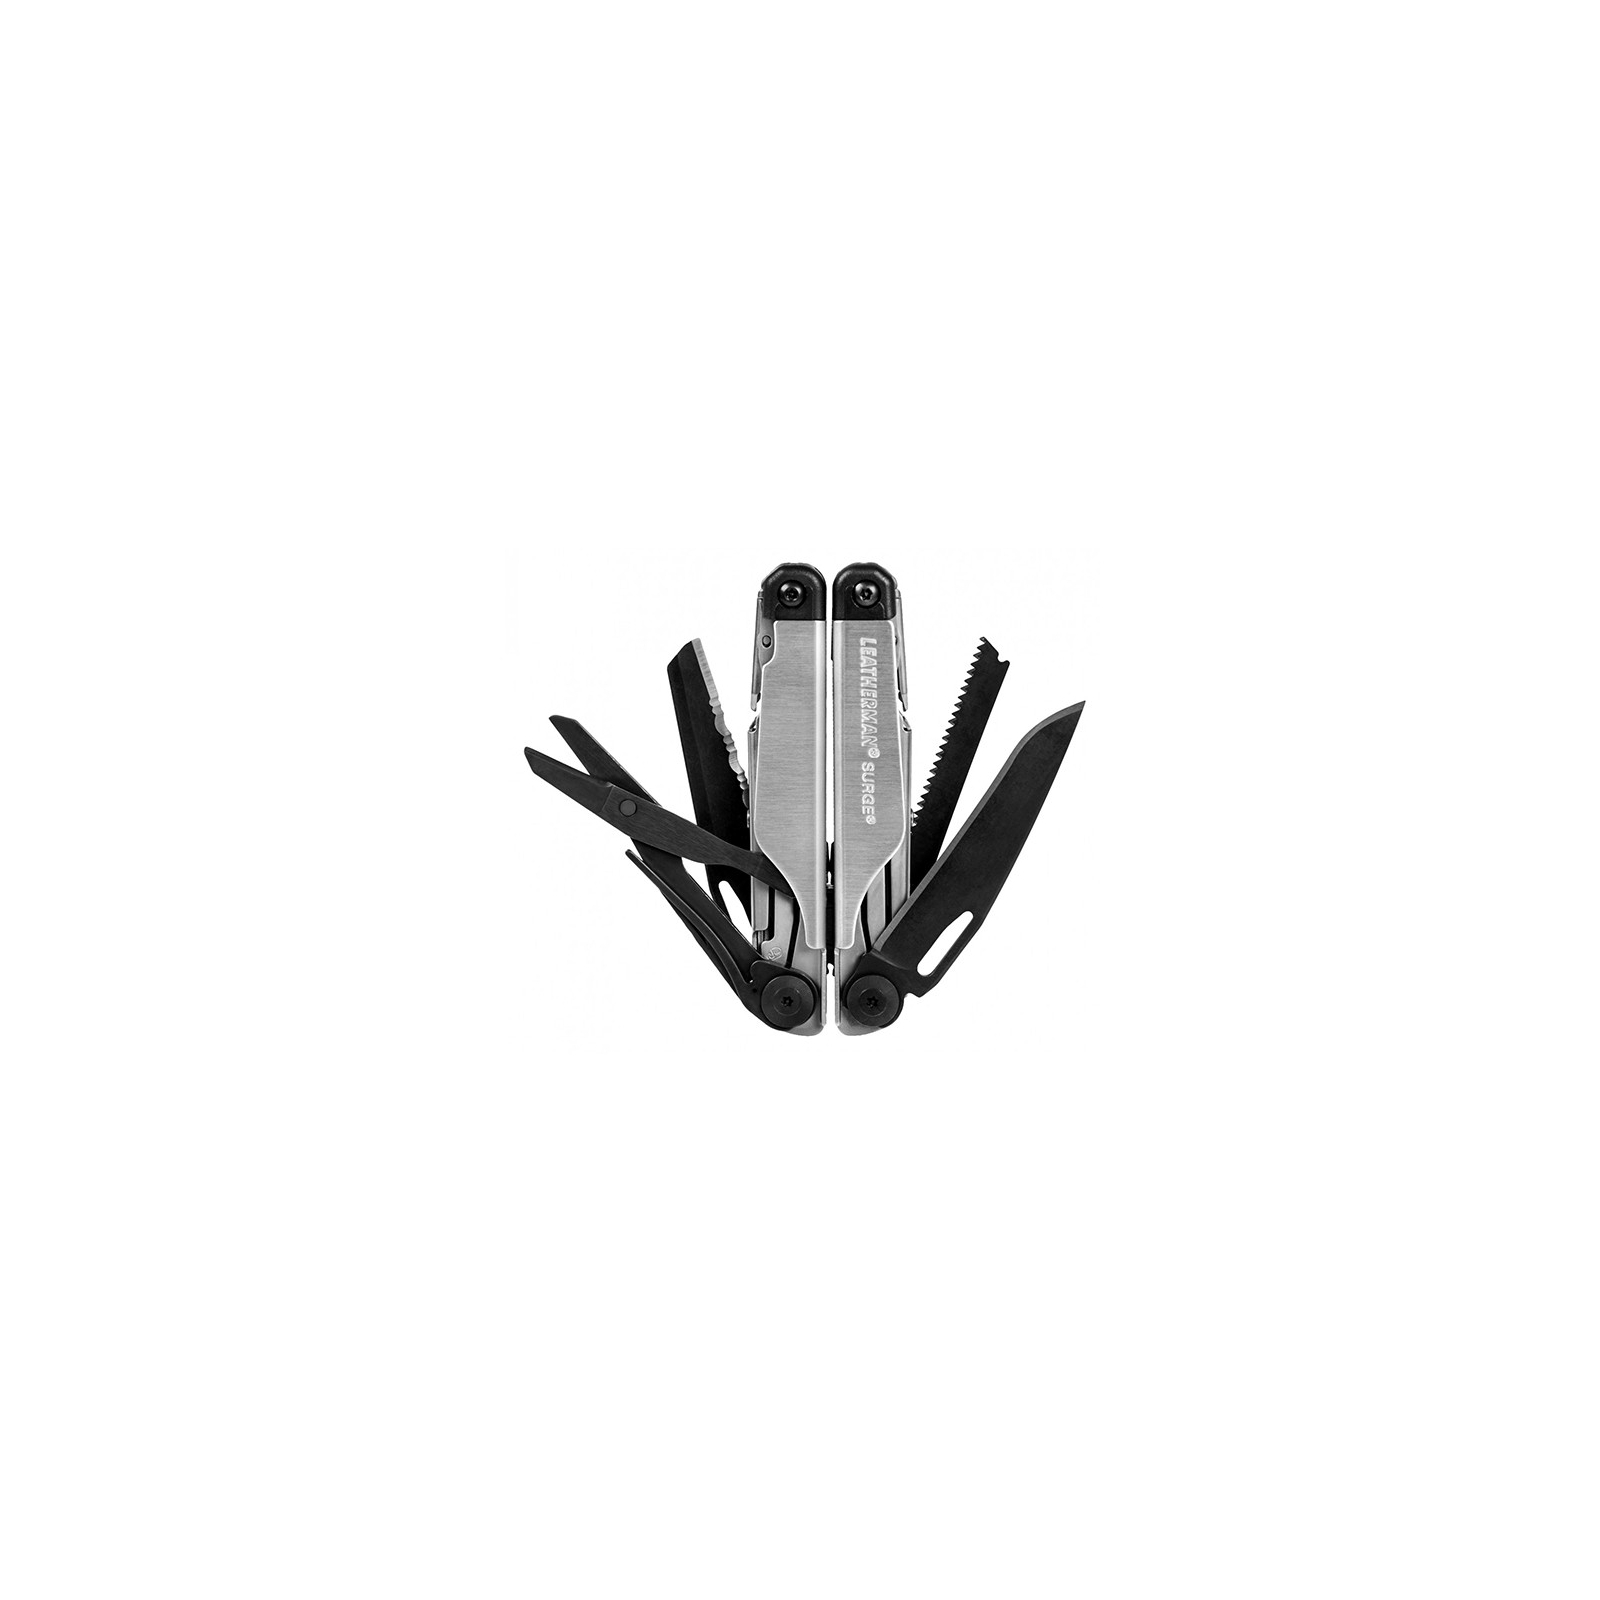 Мультитул Leatherman Surge BLACK&SILVER, чехол MOLLE, картоная коробка (832462) изображение 8